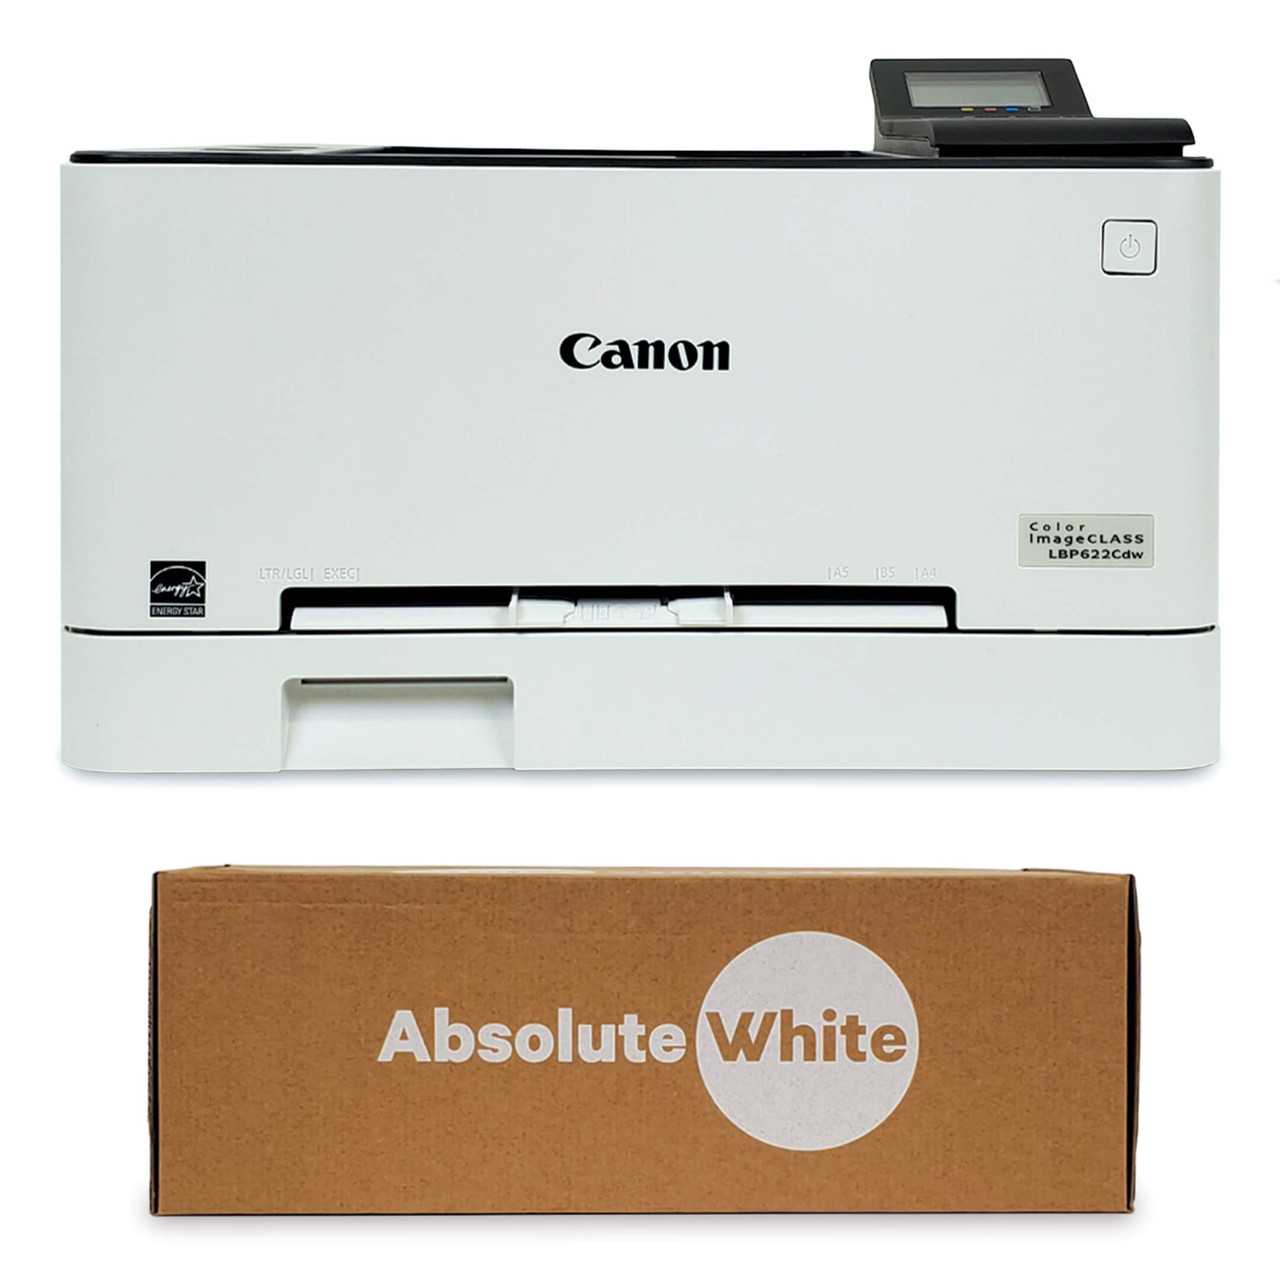 Potentiel Berolige ustabil Canon LBP622CDW Color Printer with Absolute White Toner Bundle